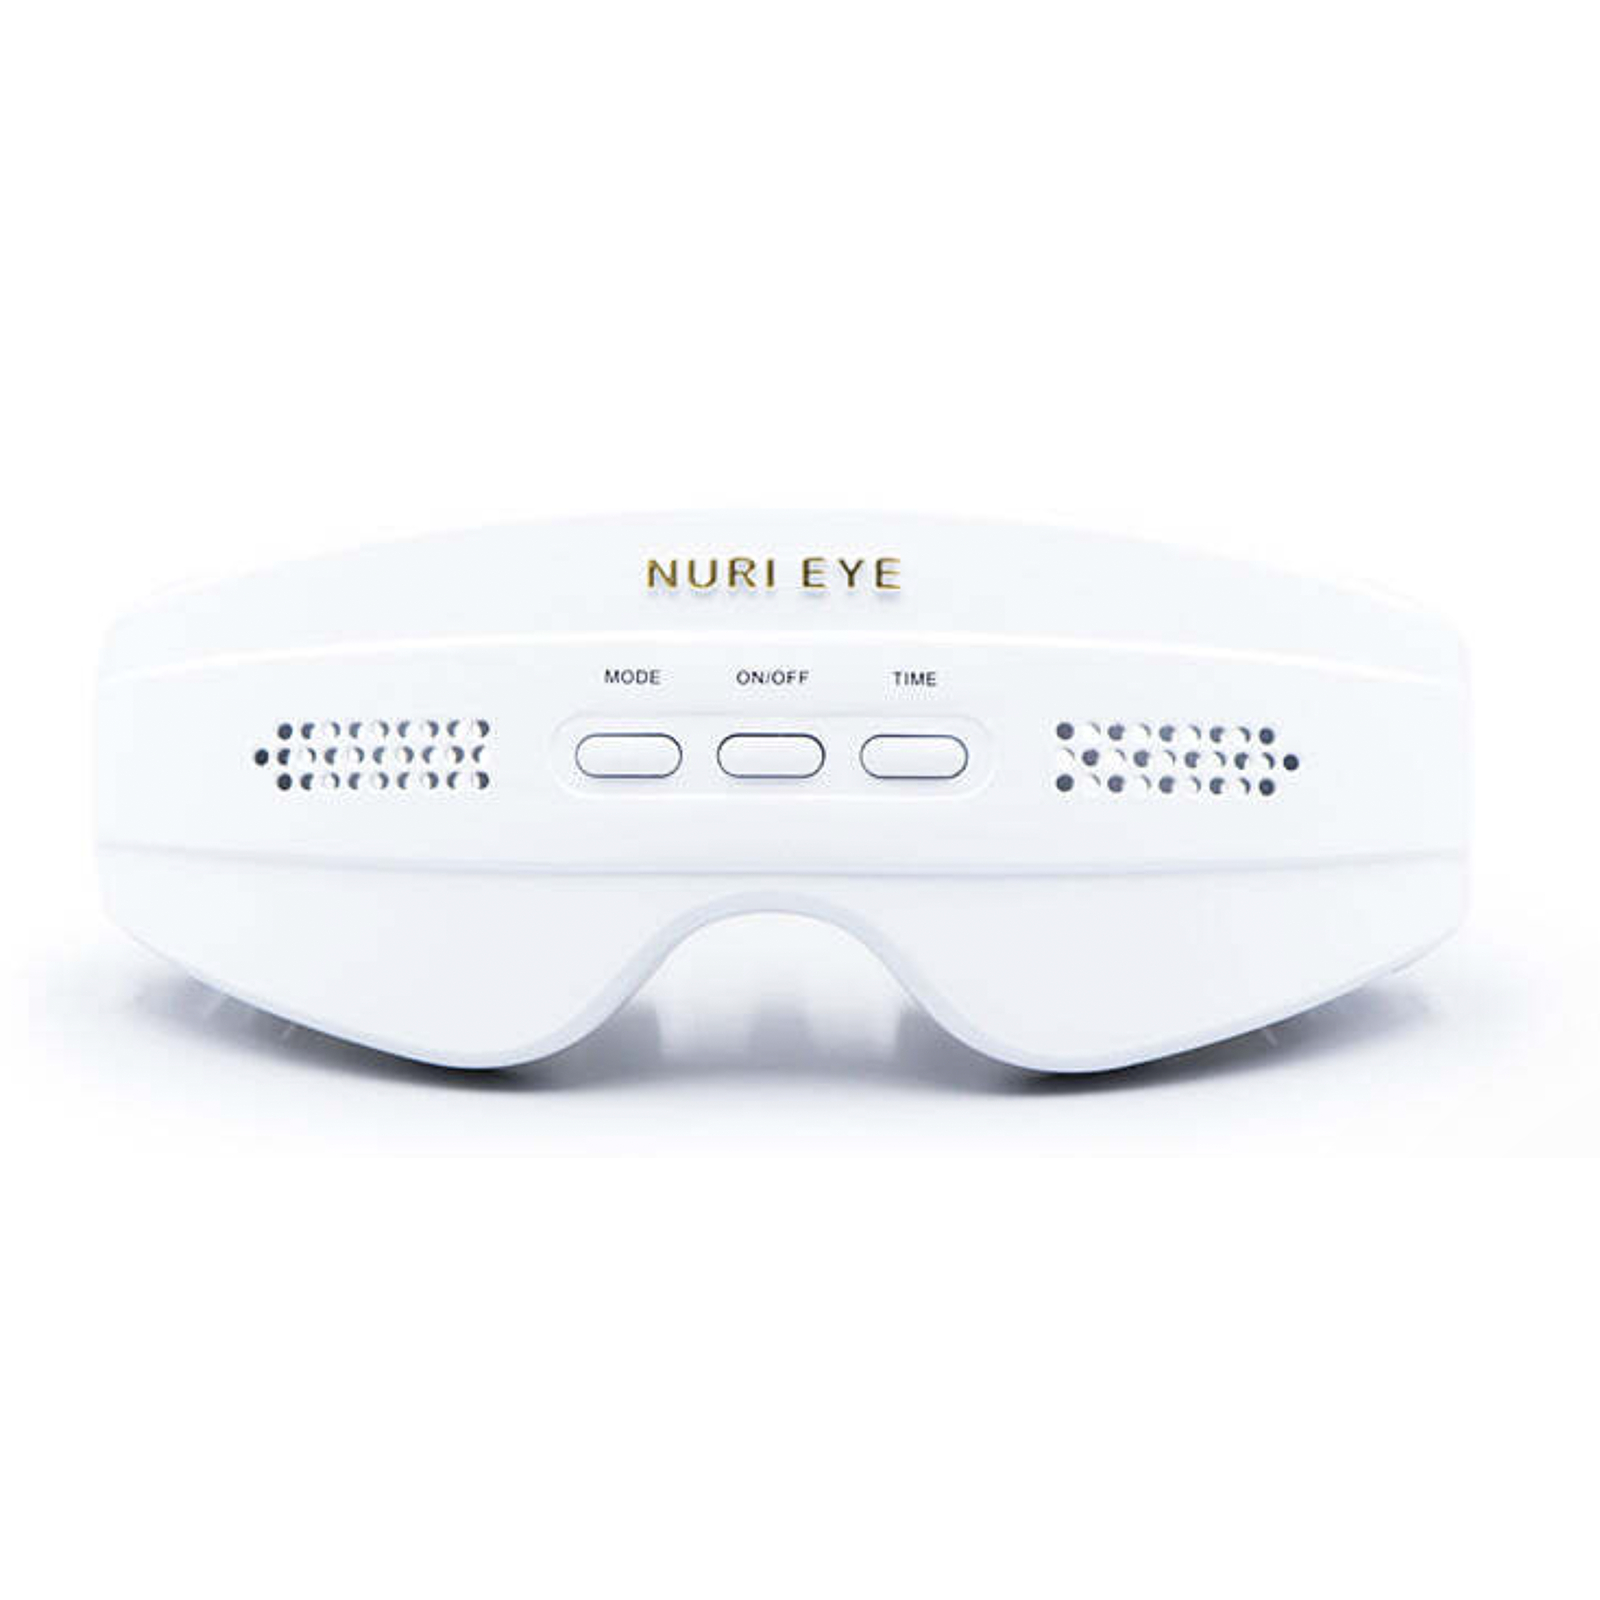 NURIEYE-1 Eye Massager